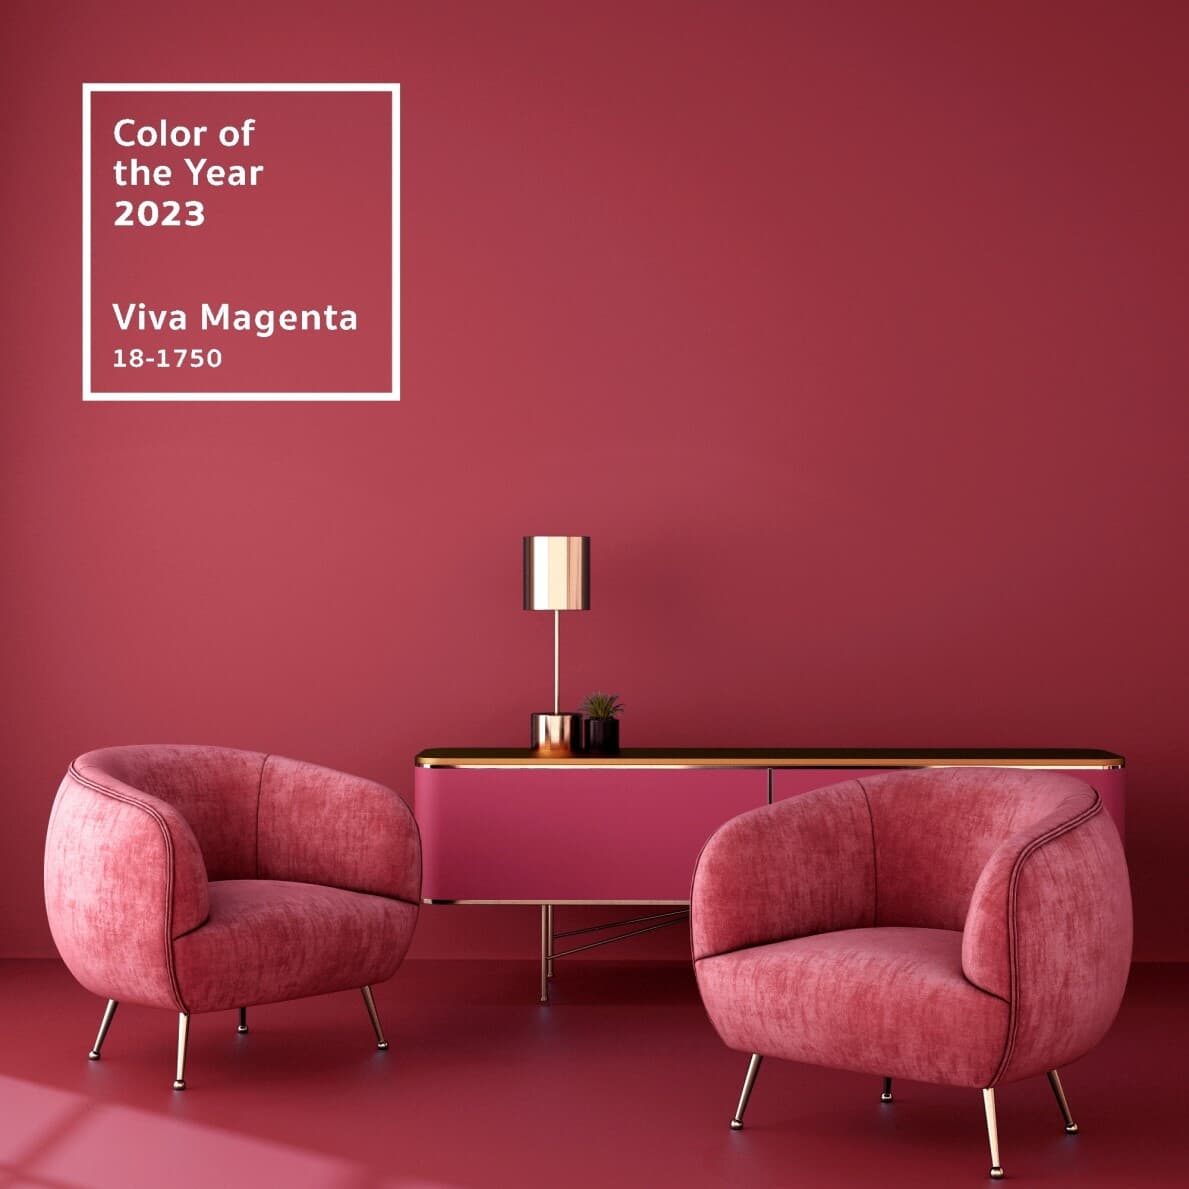 Color of the Year Viva Magenta in interior design